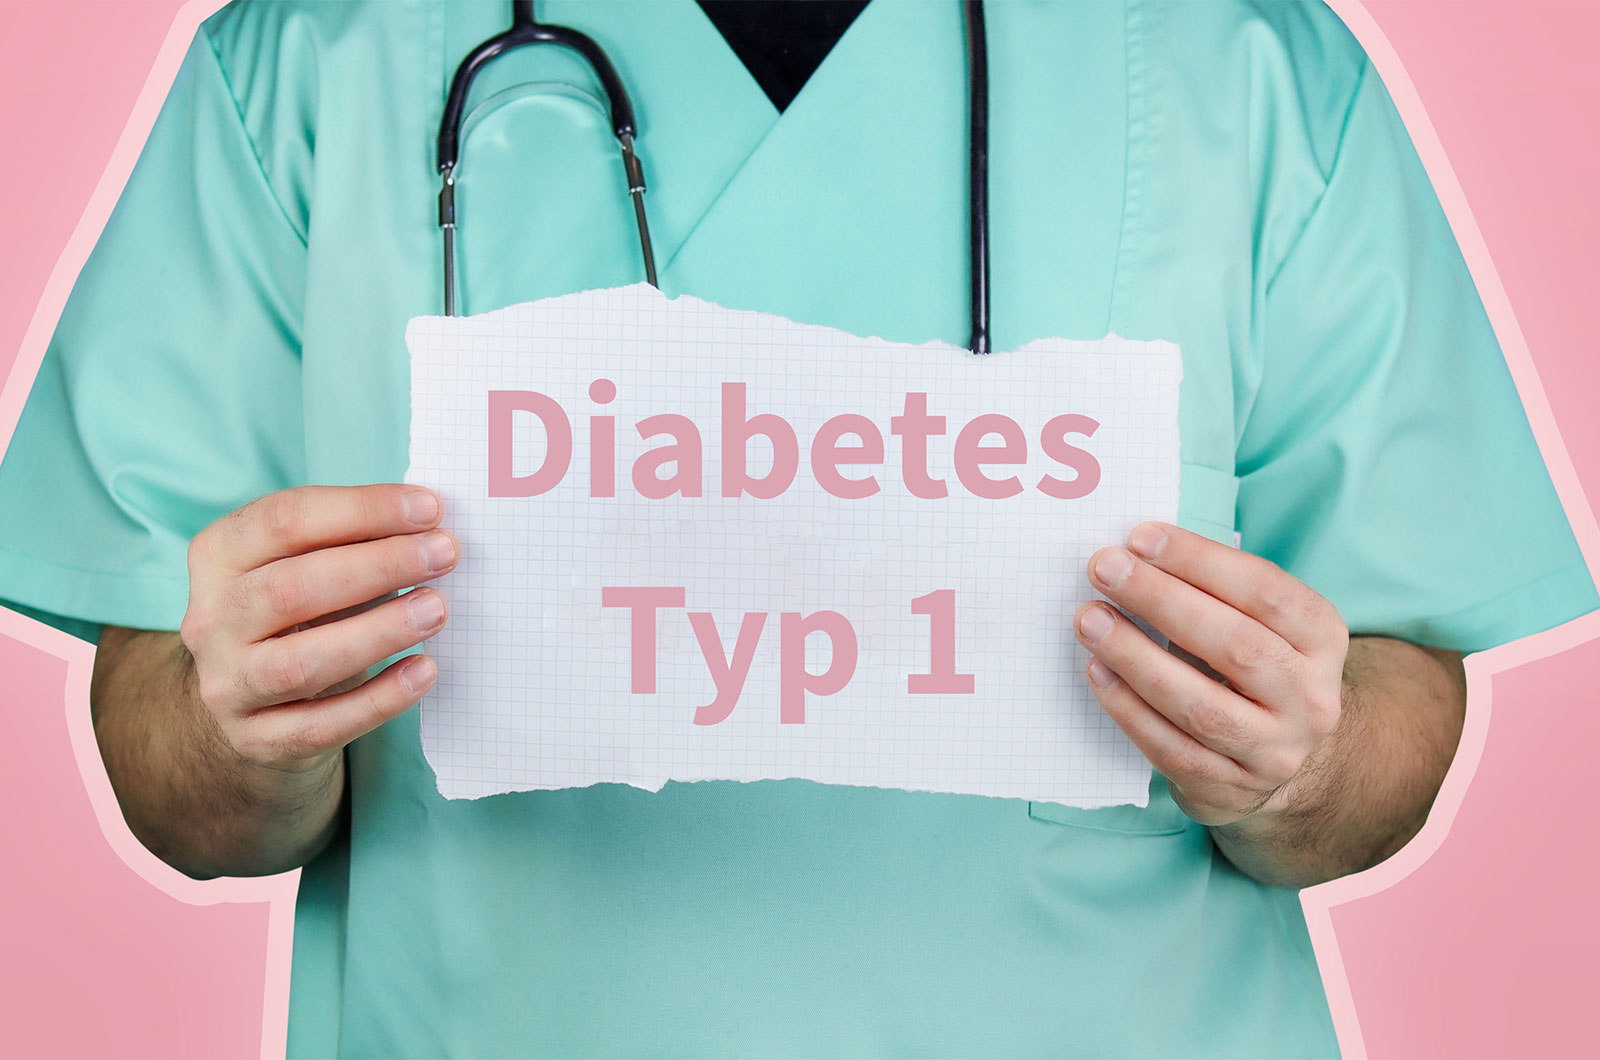 Arzt mit Zettel - Diabetes Typ 1